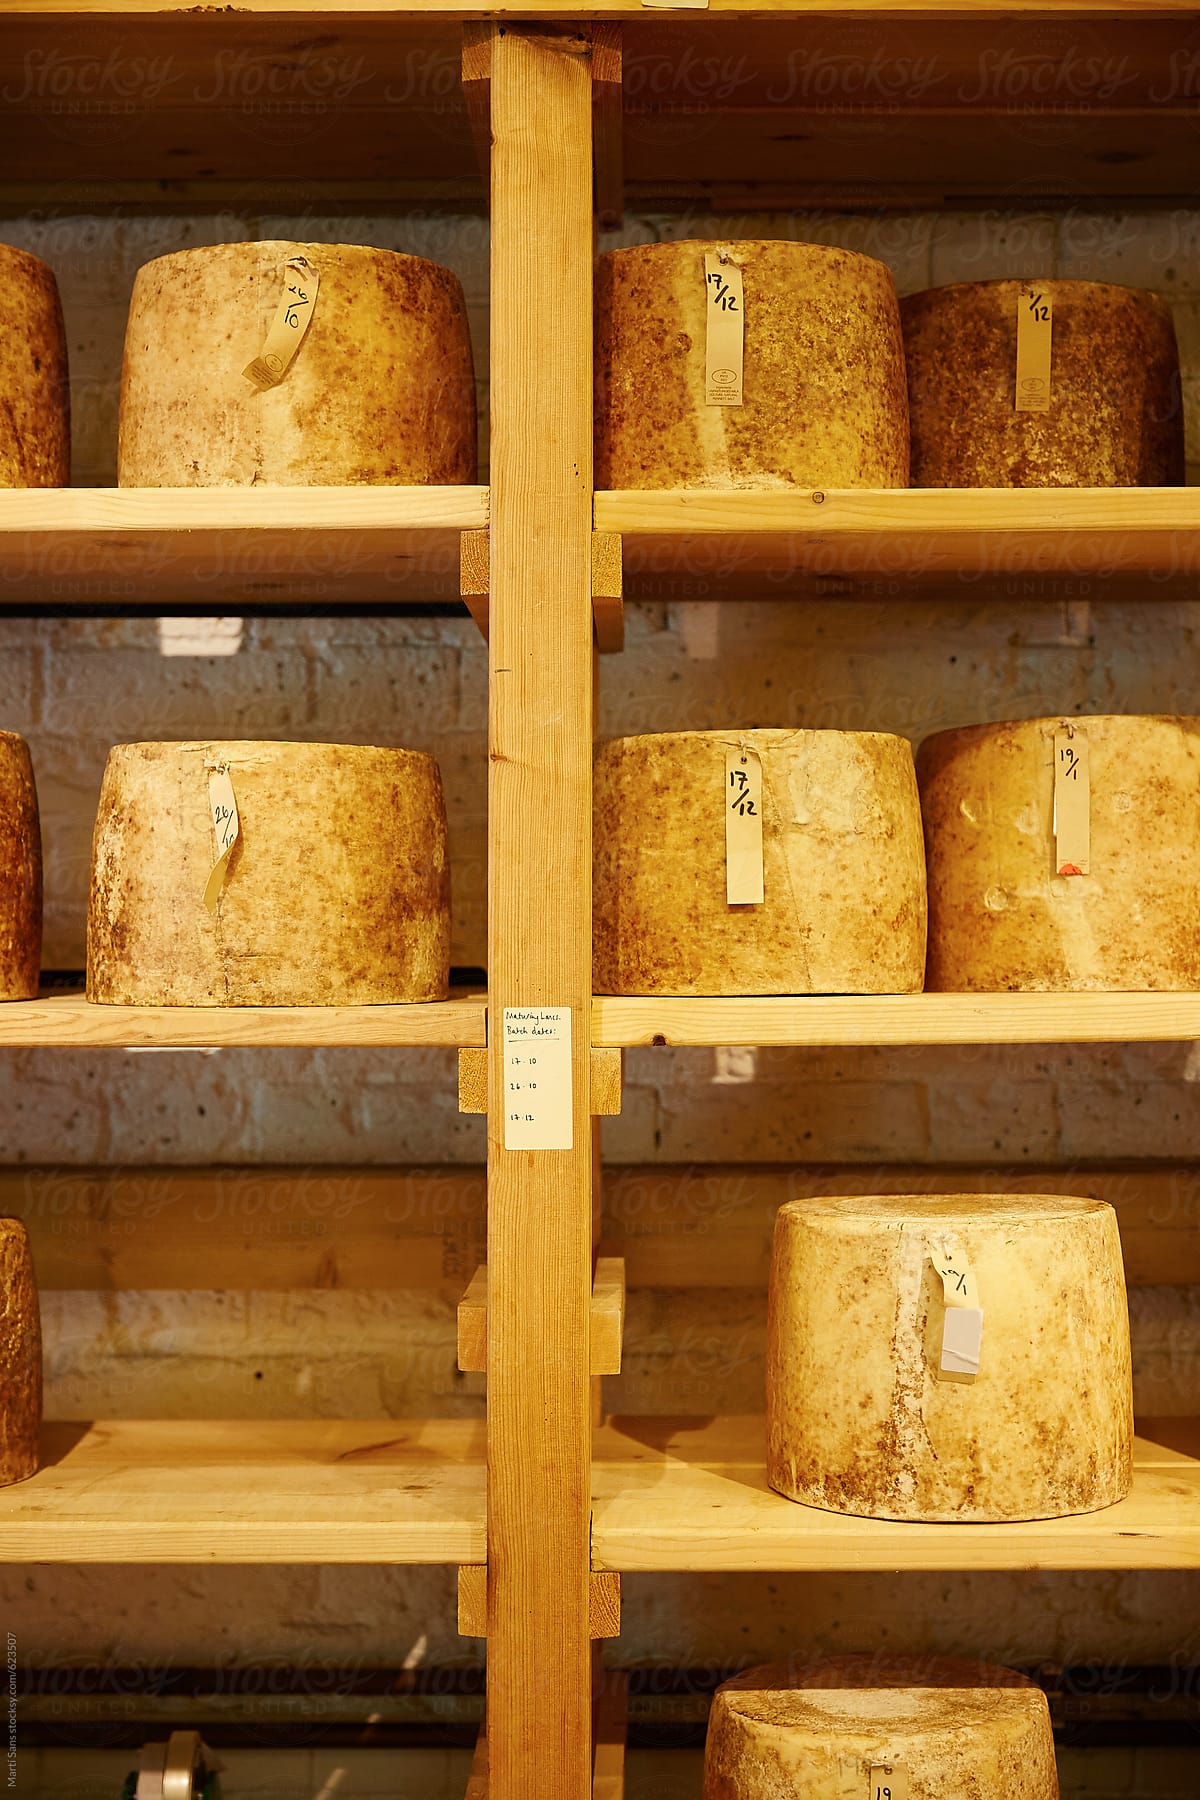 Lancashire cheeses